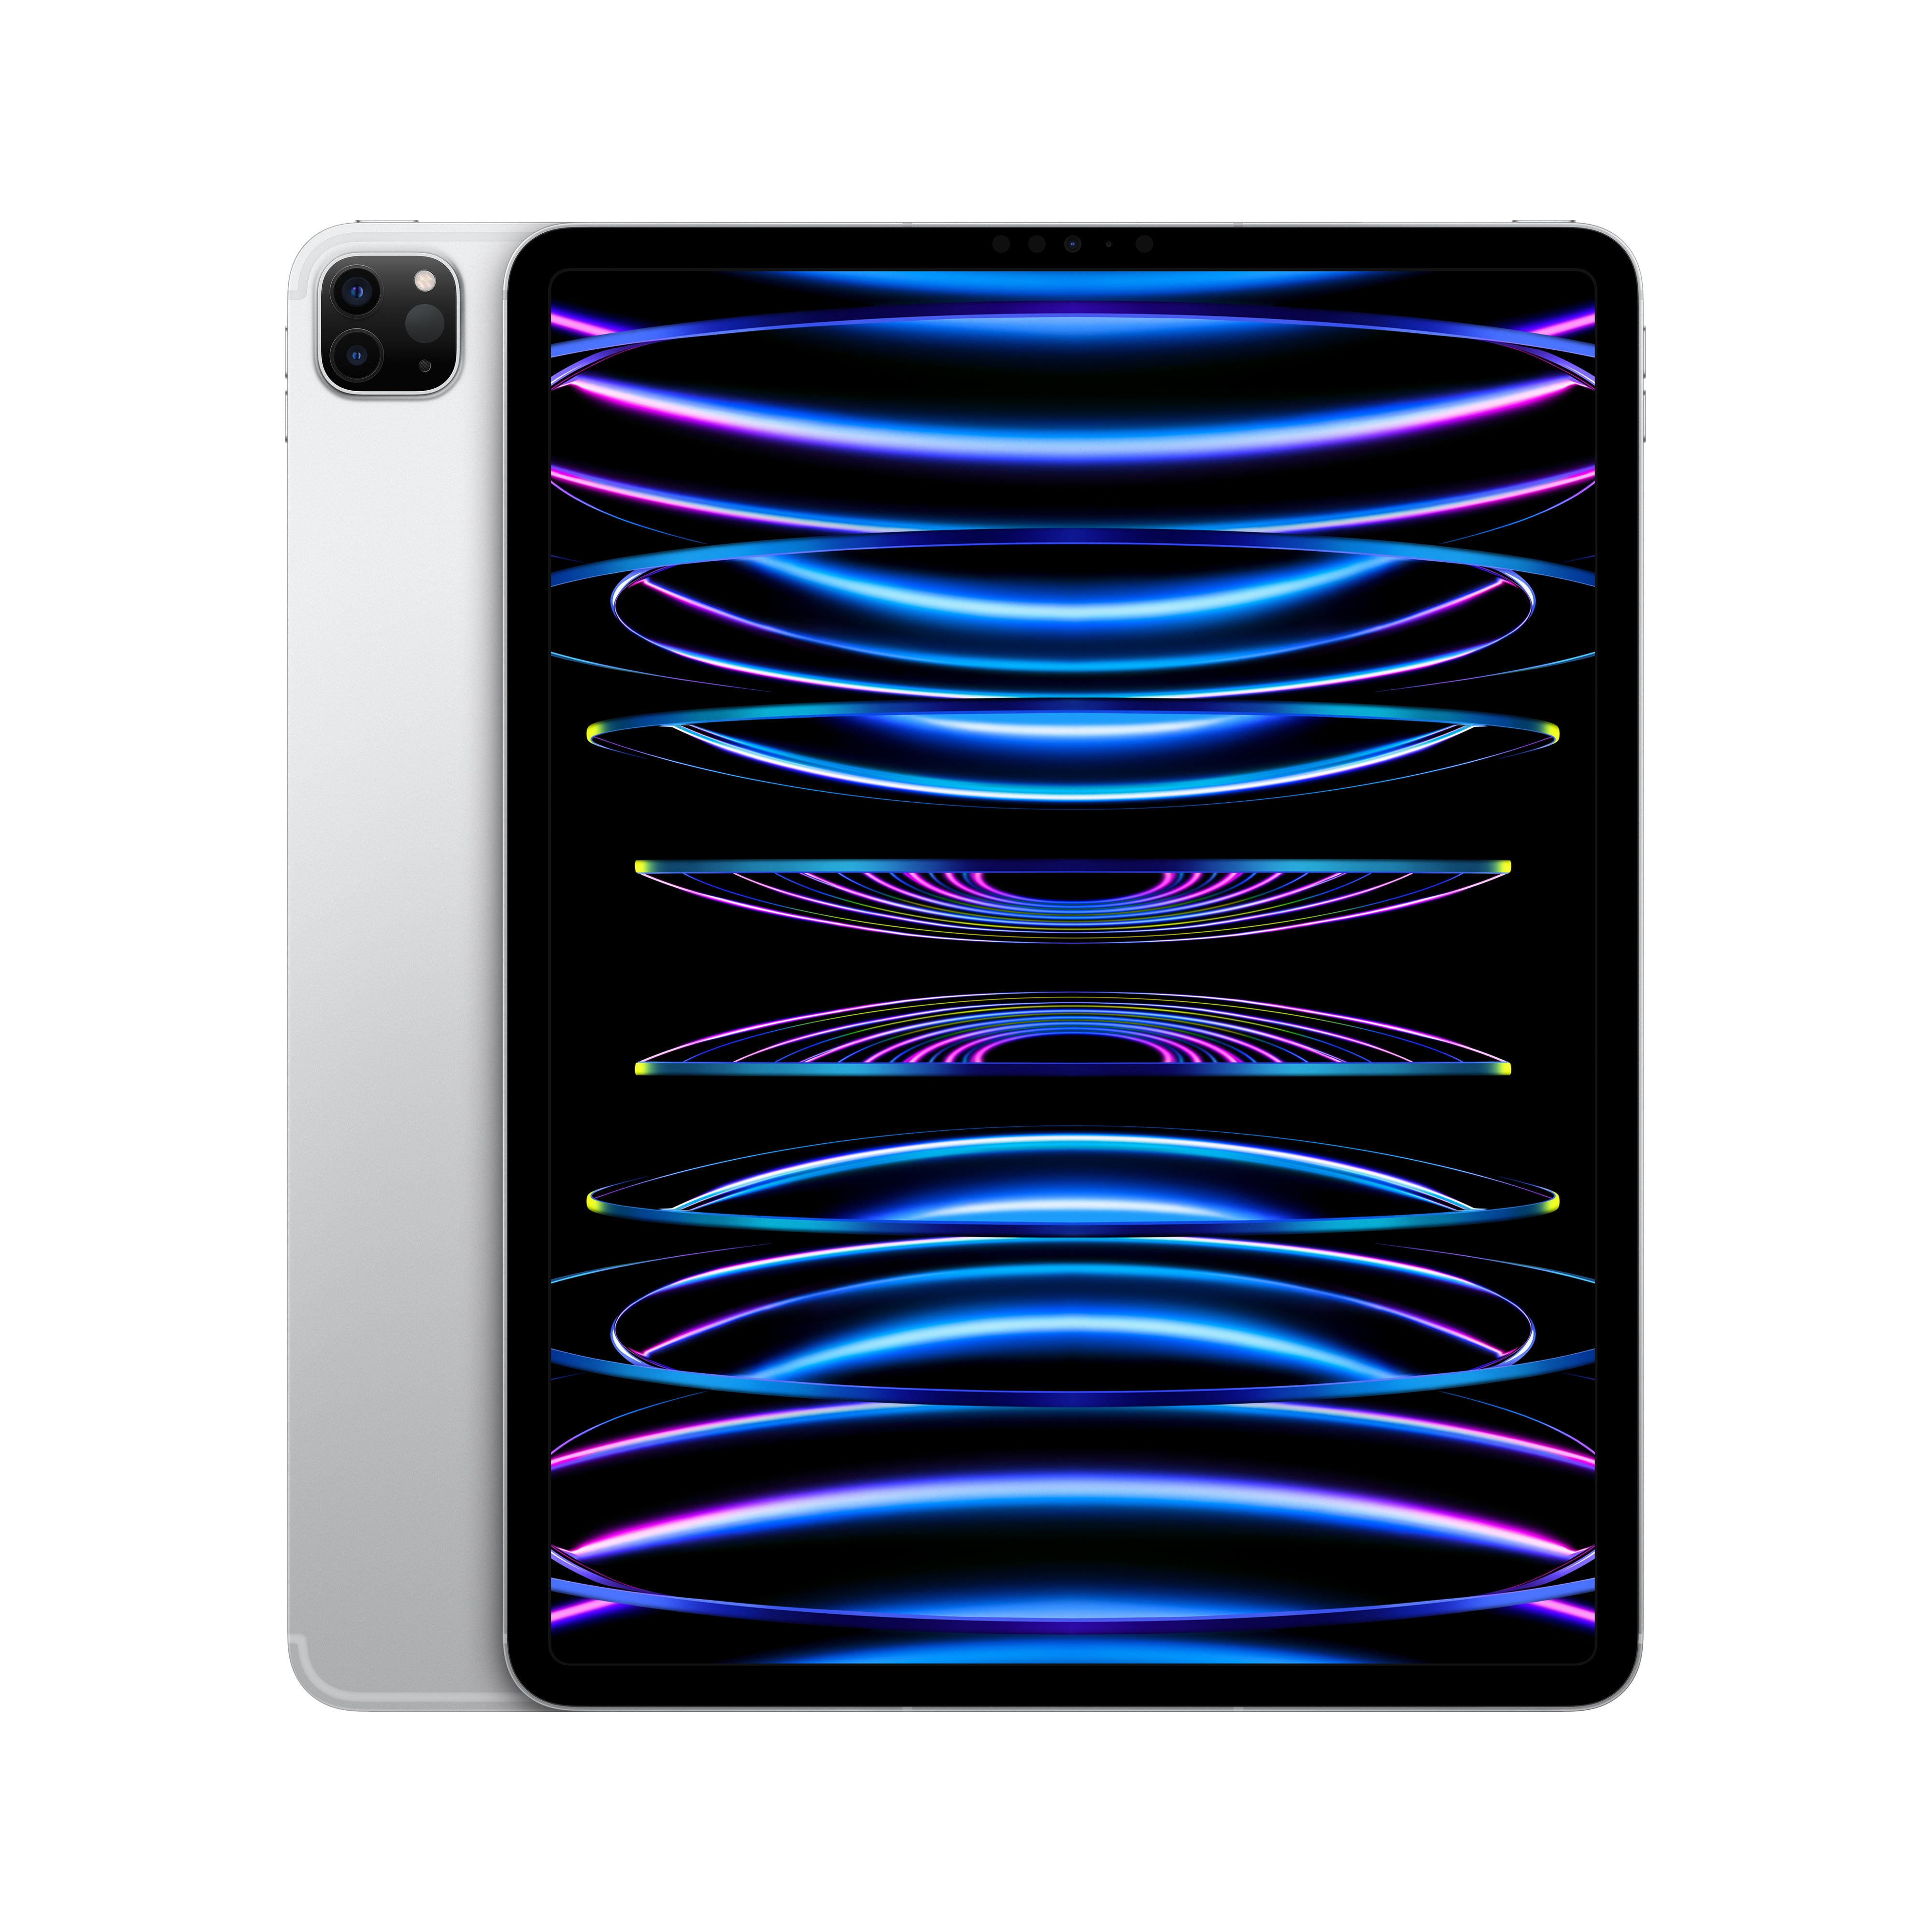 iPad Pro 12.9: (6th generation)